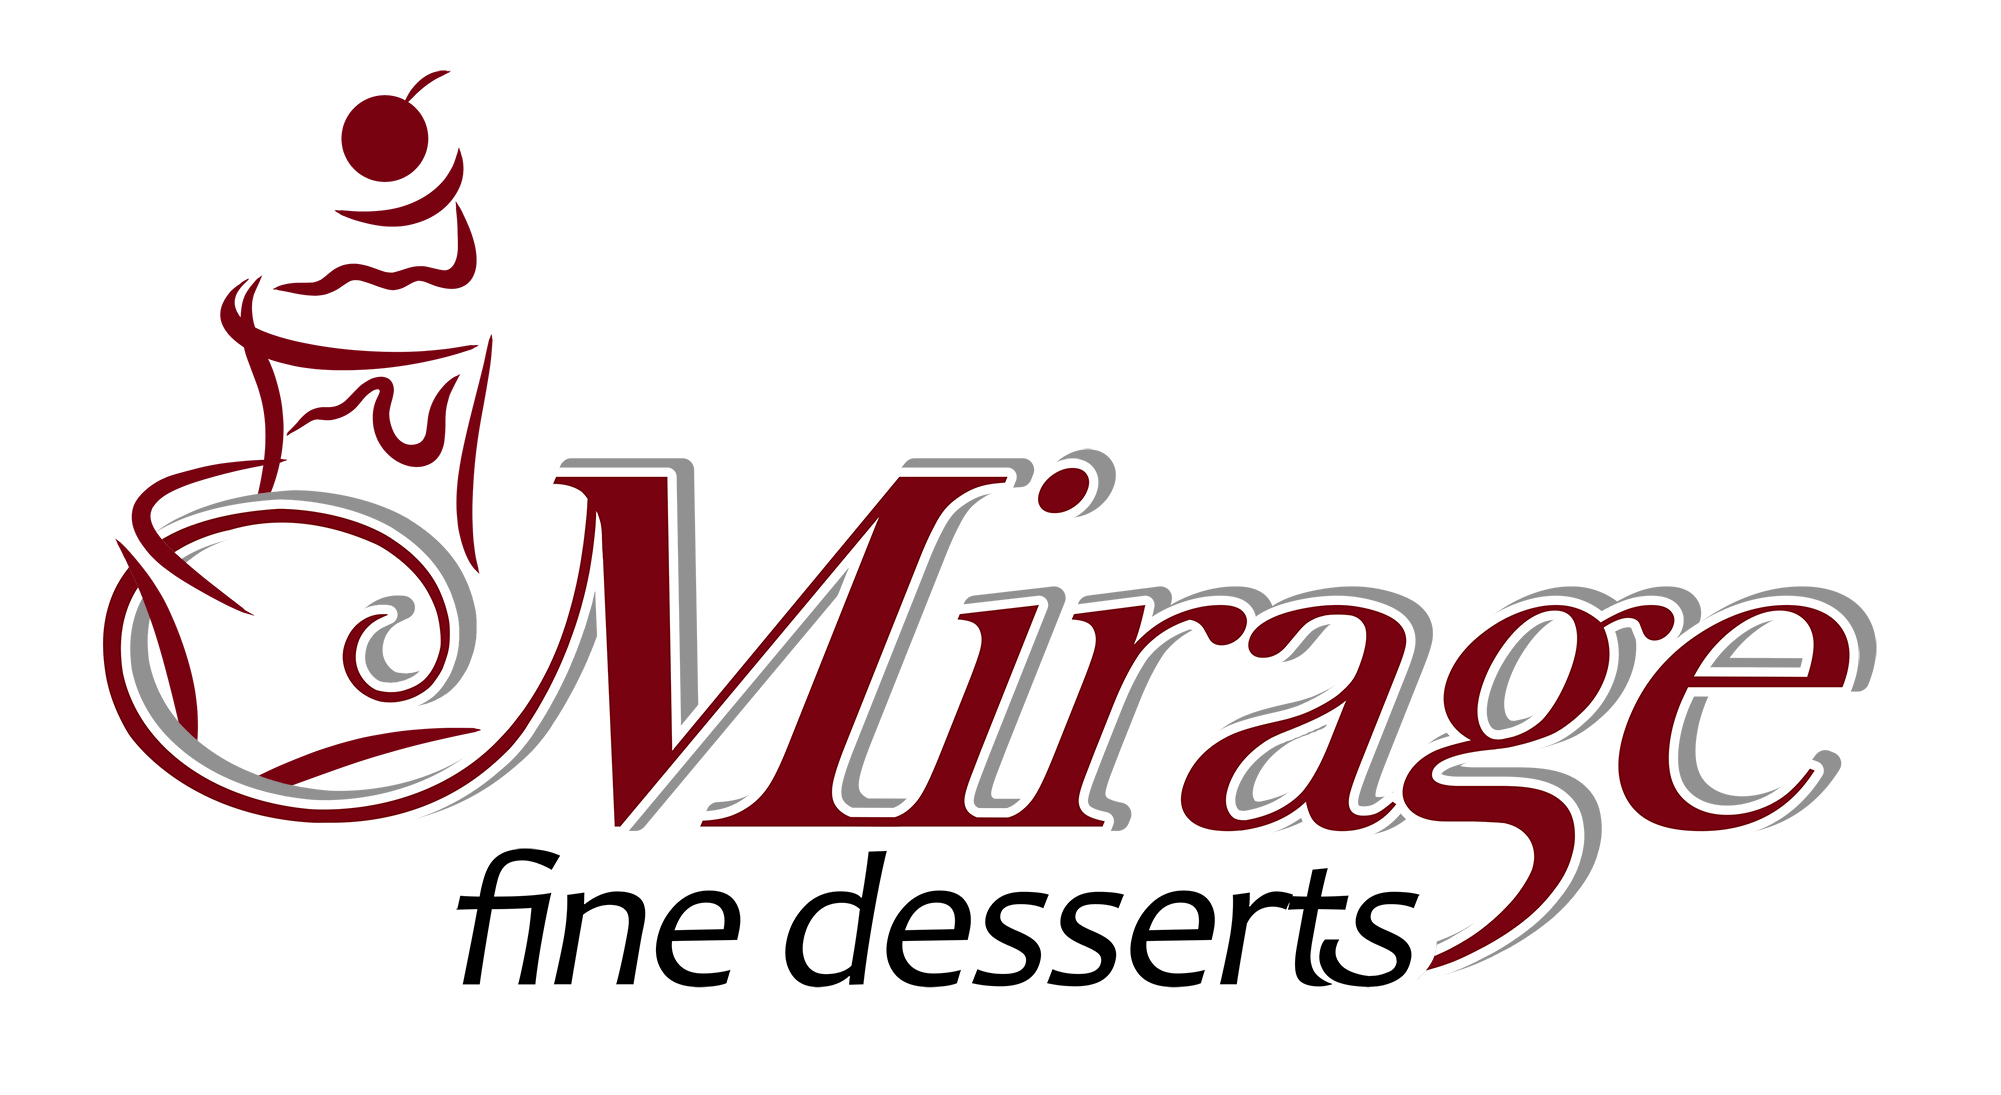 Mirage foods: Creamy Desserts & Pastry Mixes